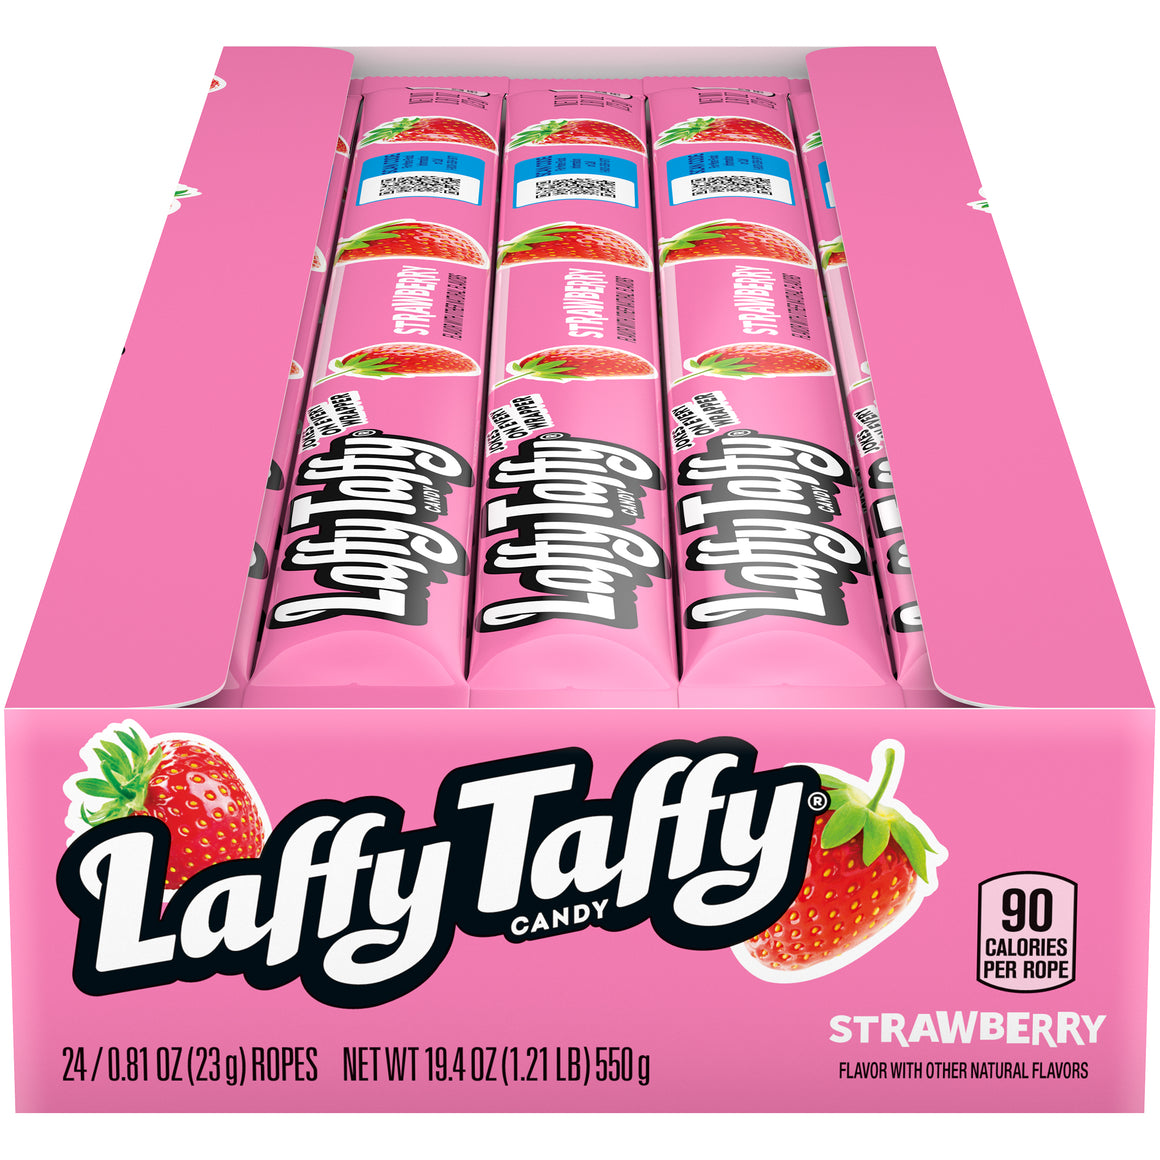 All City Candy Laffy Taffy Strawberry Rope .81-oz. 1 Piece Taffy Ferrara Candy Company For fresh candy and great service, visit www.allcitycandy.com